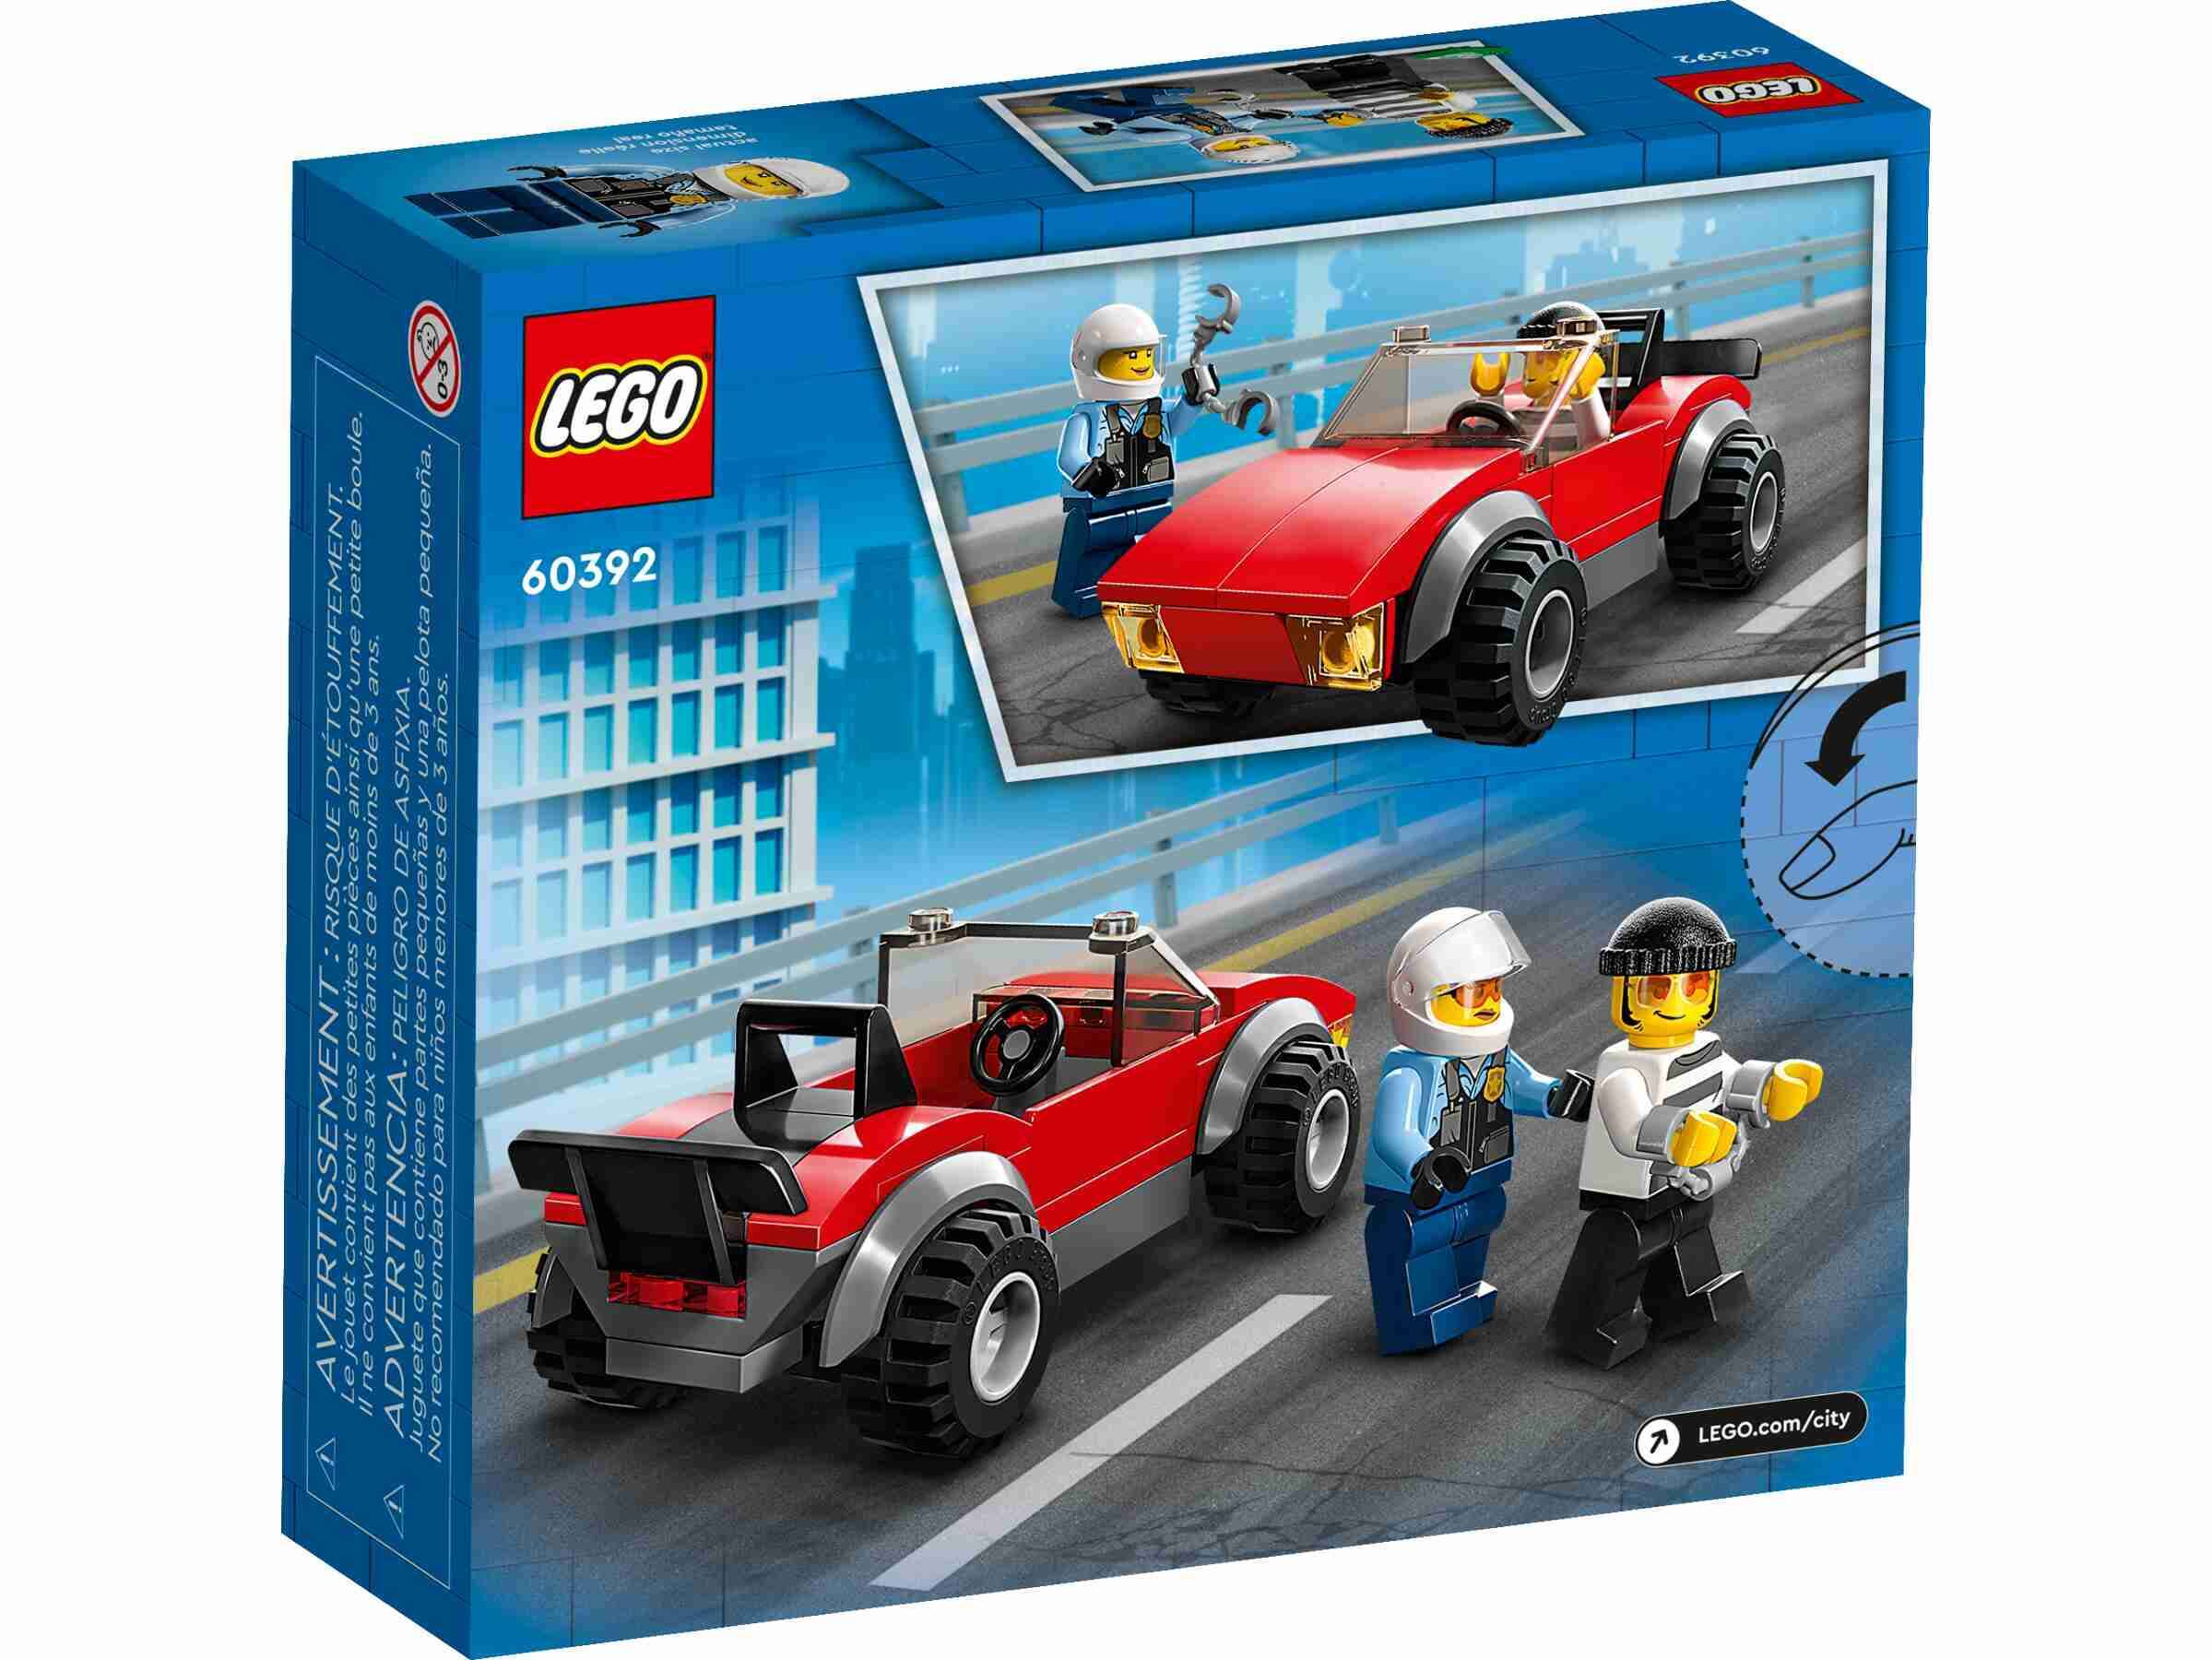 LEGO 60392 City Verfolgungsjagd mit Polizei-Motorrad, 2 Minifiguren 